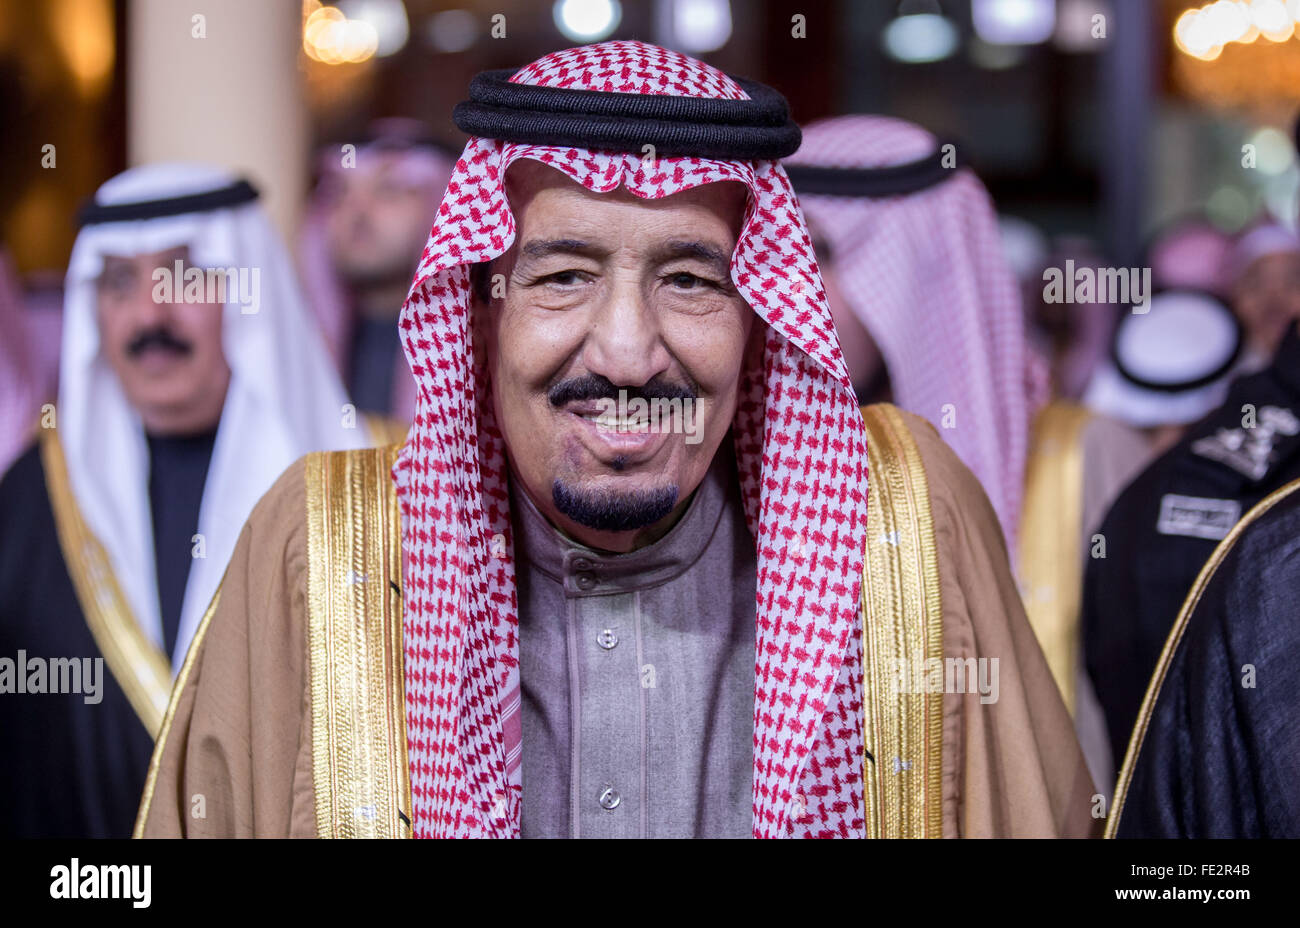 Riad, Saudi Arabia. 03rd Feb, 2016. Salman bin Abdulaziz Al Saud, King of Saudi Arabia, pictured at the Al-Jenadriyah festival in Riad, Saudi Arabia, 03 February 2016. Photo: MICHAEL KAPPELER/dpa/Alamy Live News Stock Photo